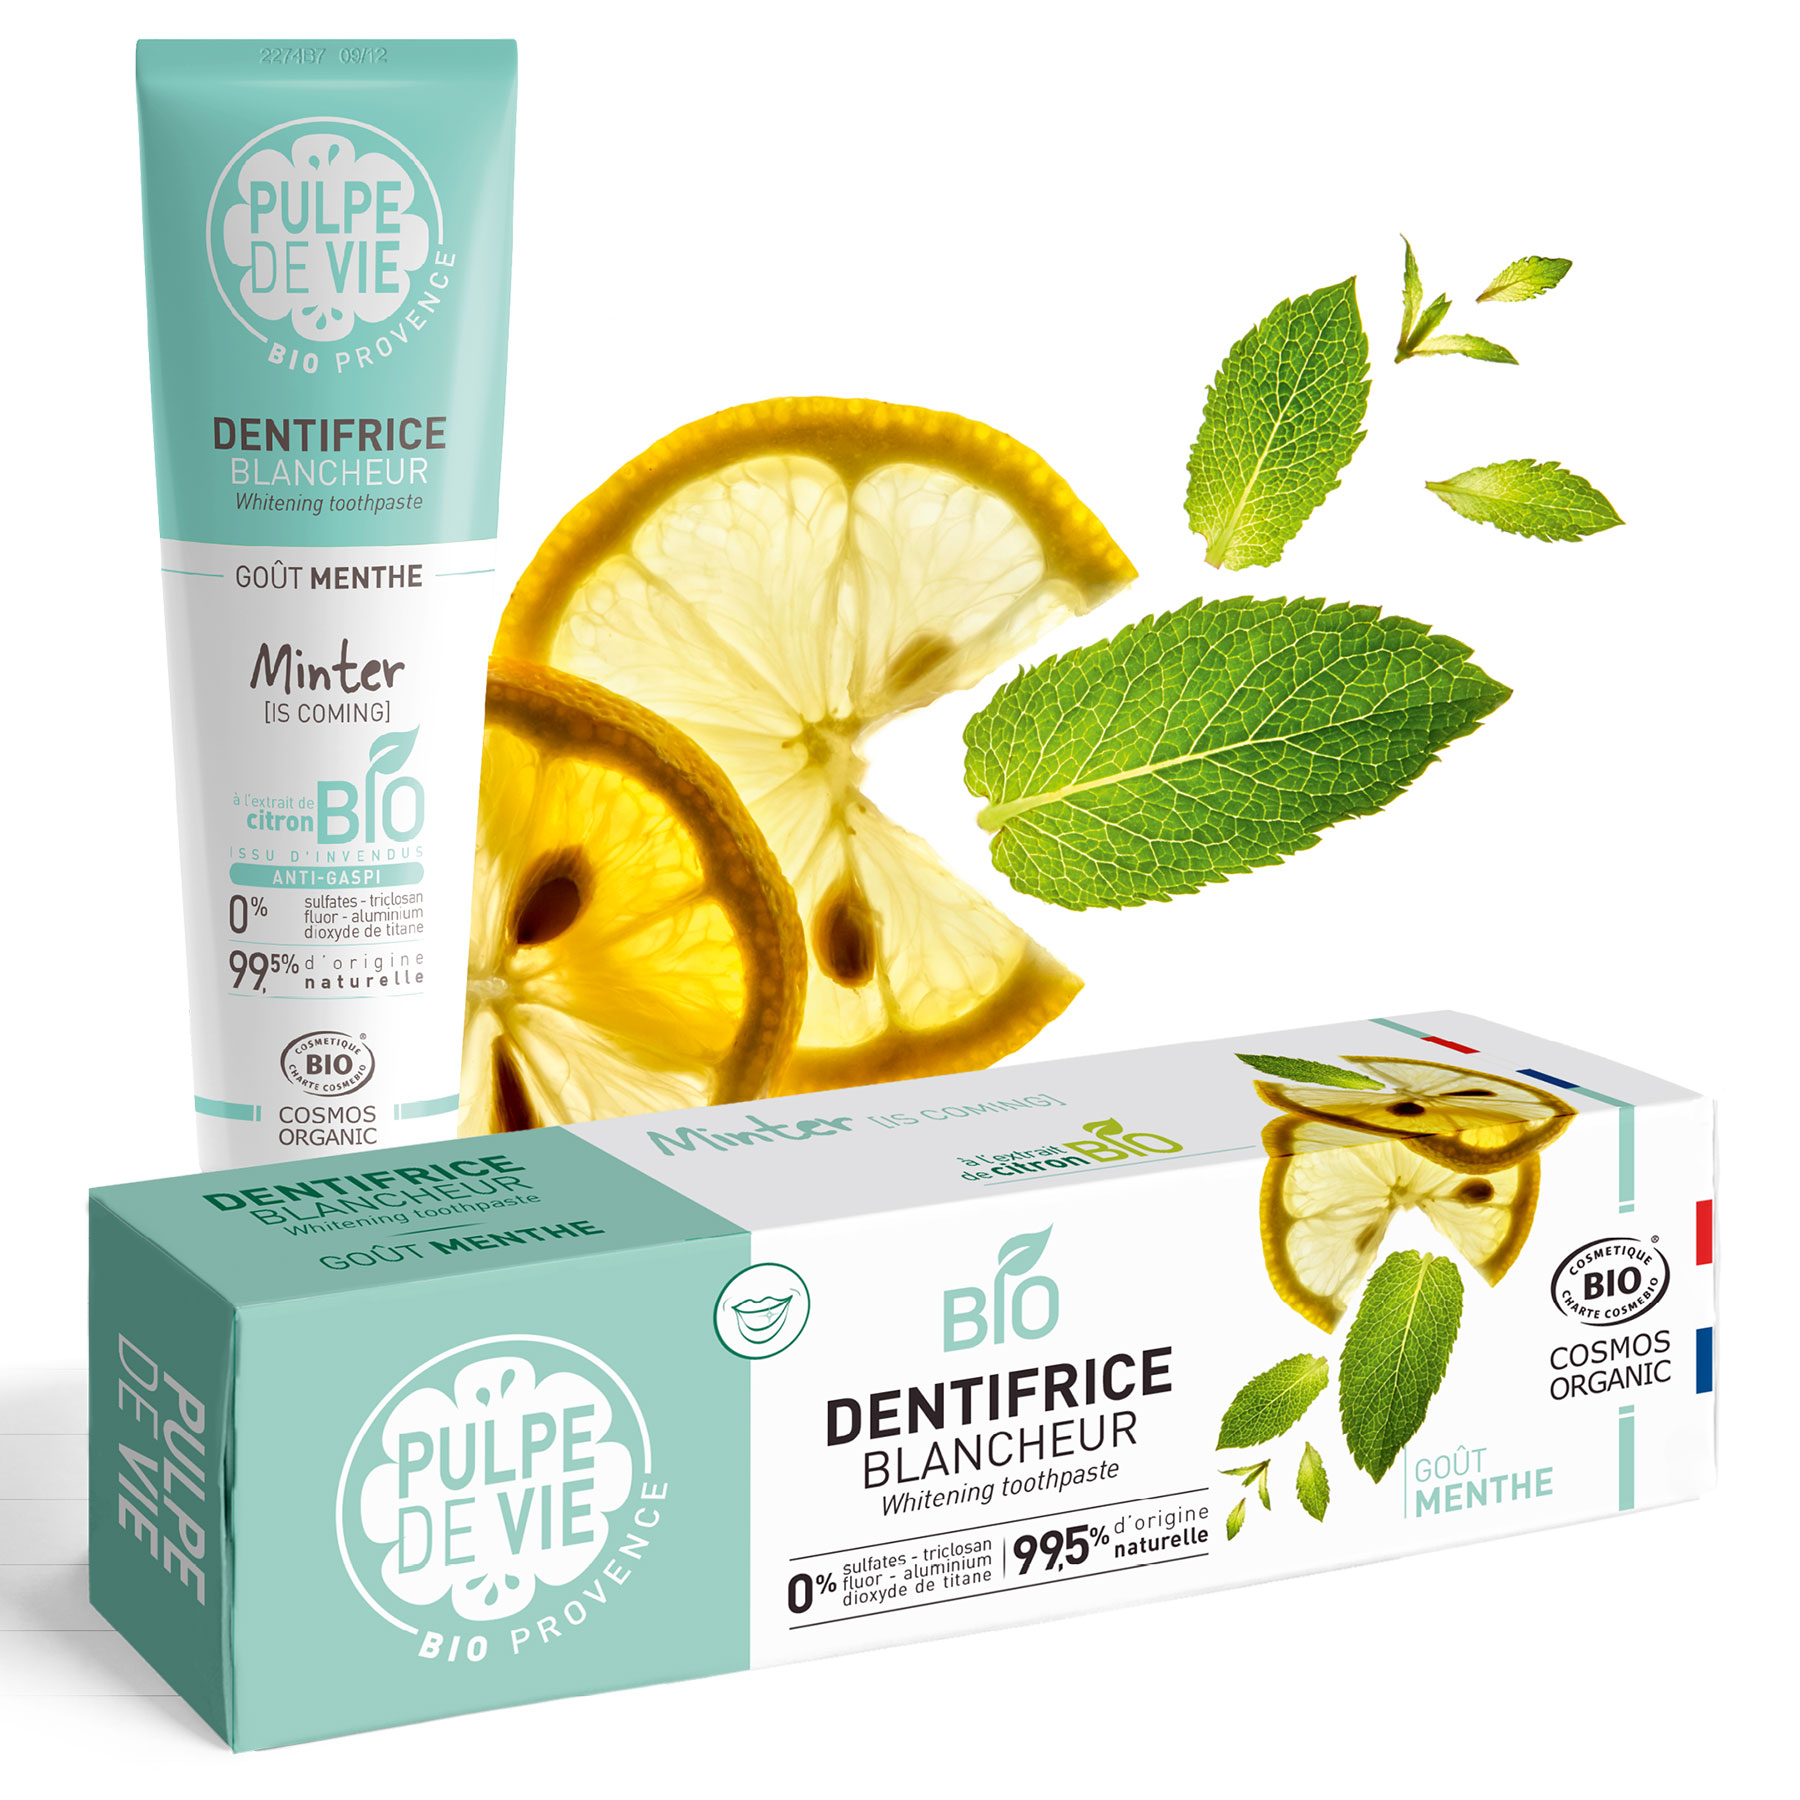 Dentifrice blancheur Bio Minter is coming de Pulpe de Vie - Tube et packaging